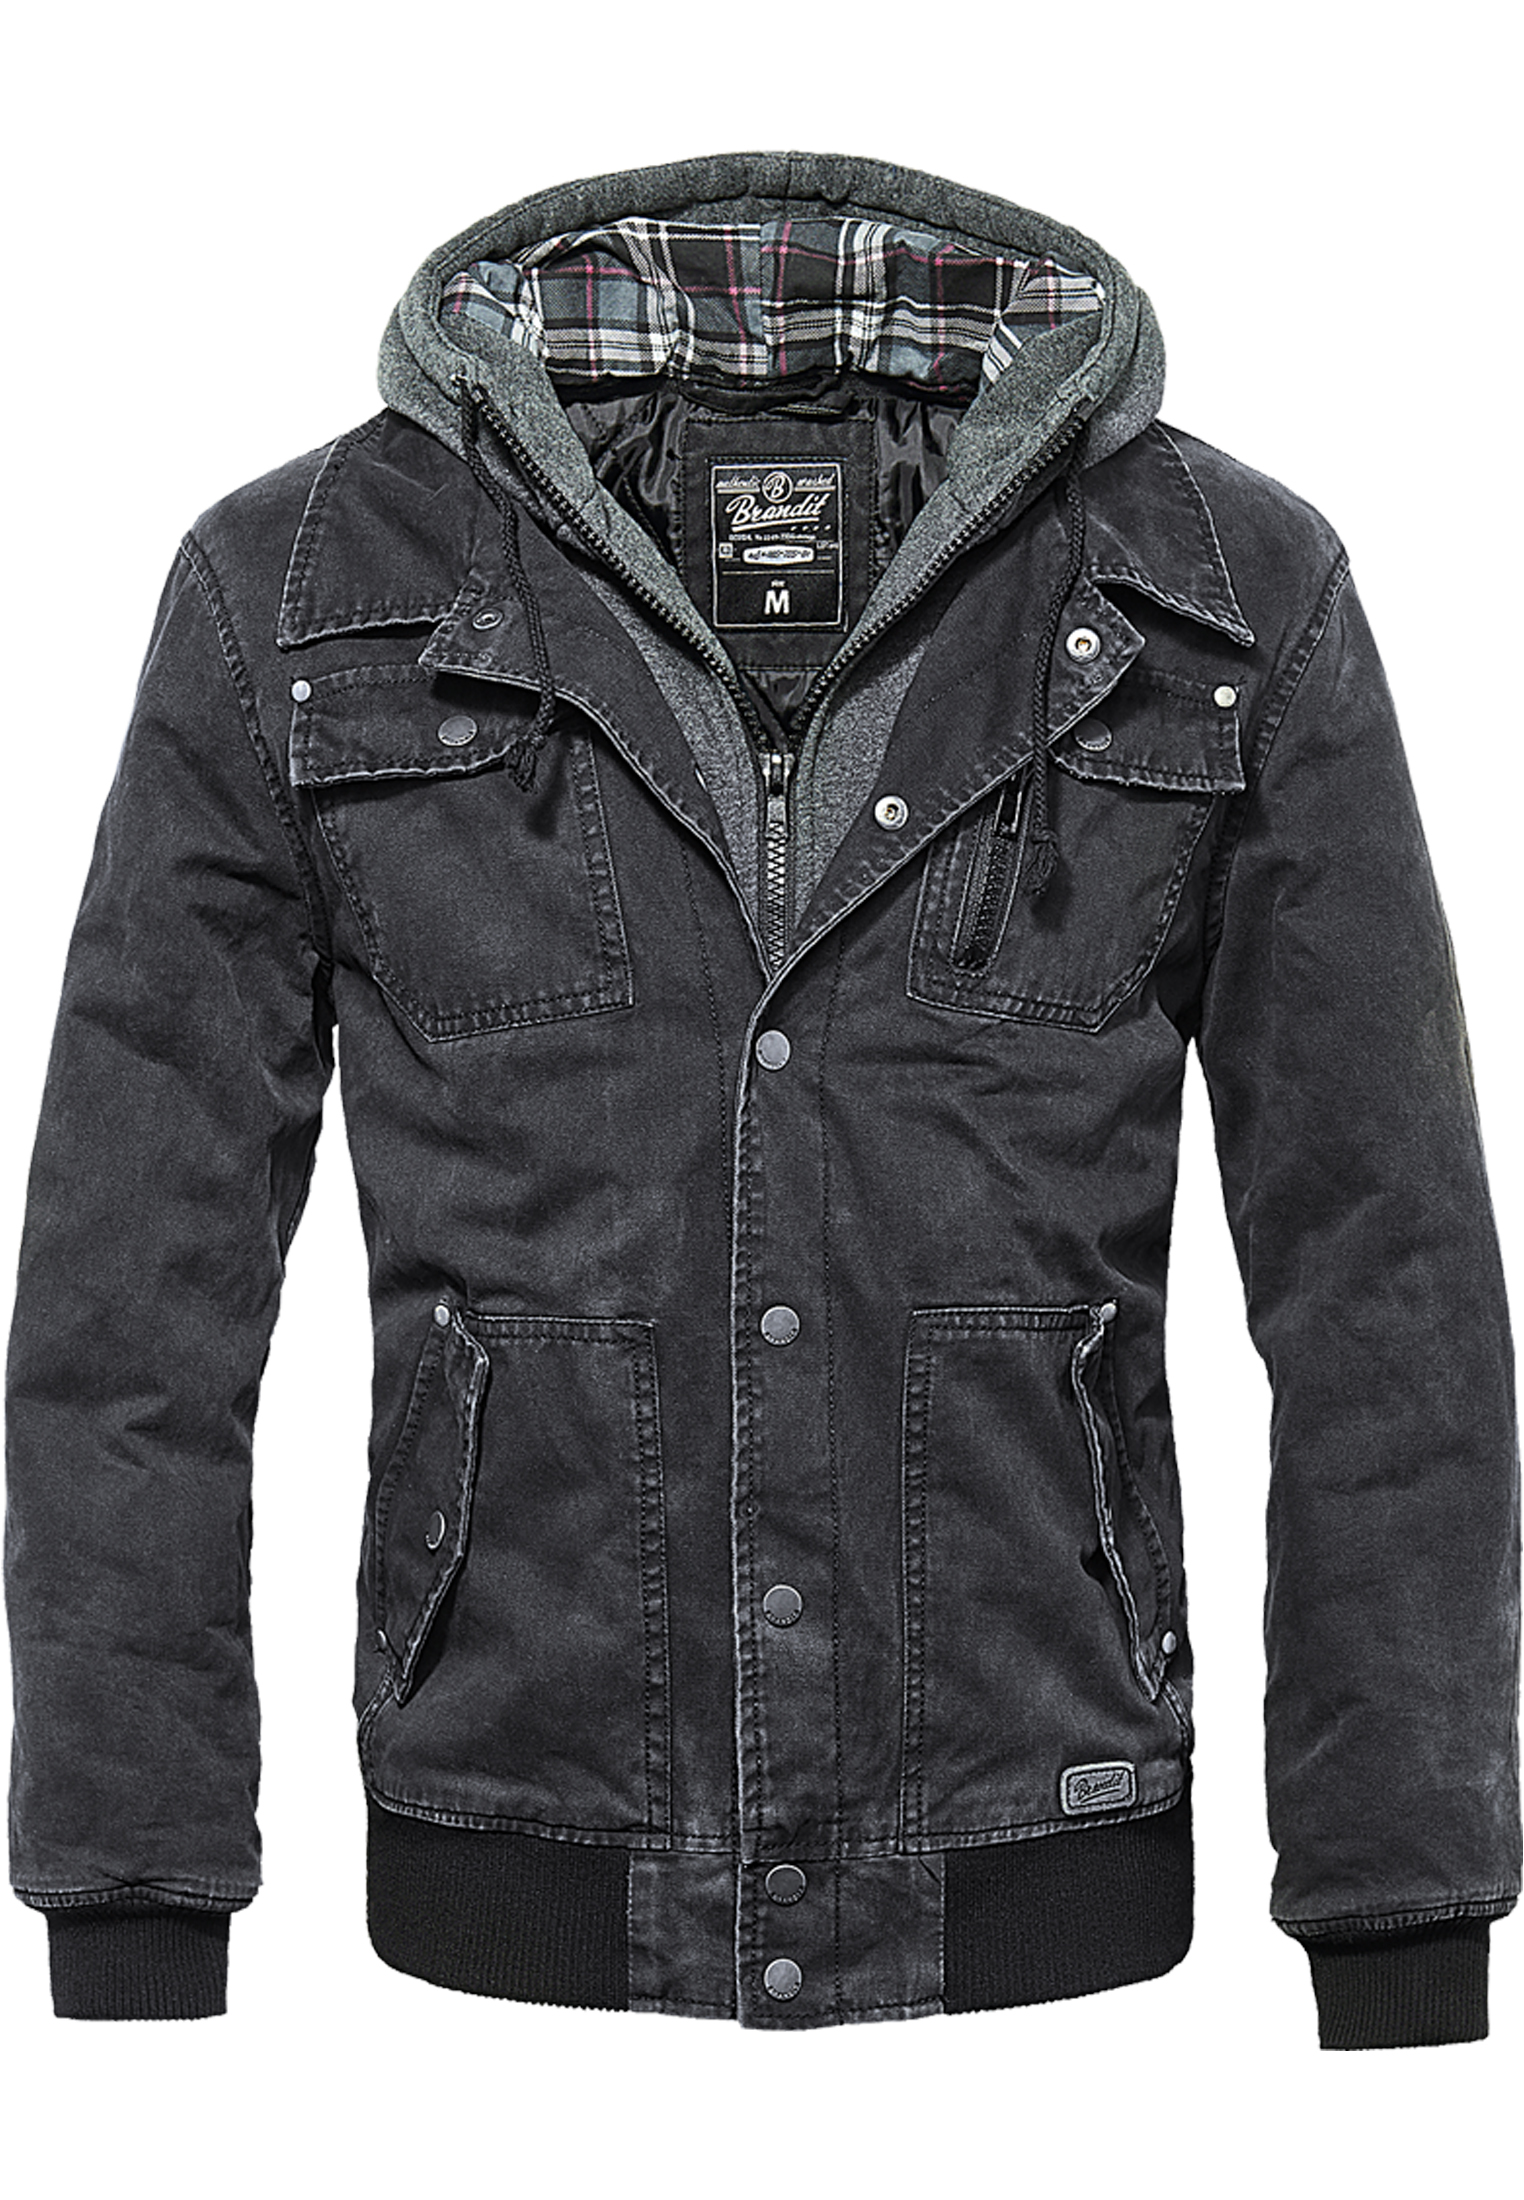 Jacken Dayton Winter Jacket in Farbe black